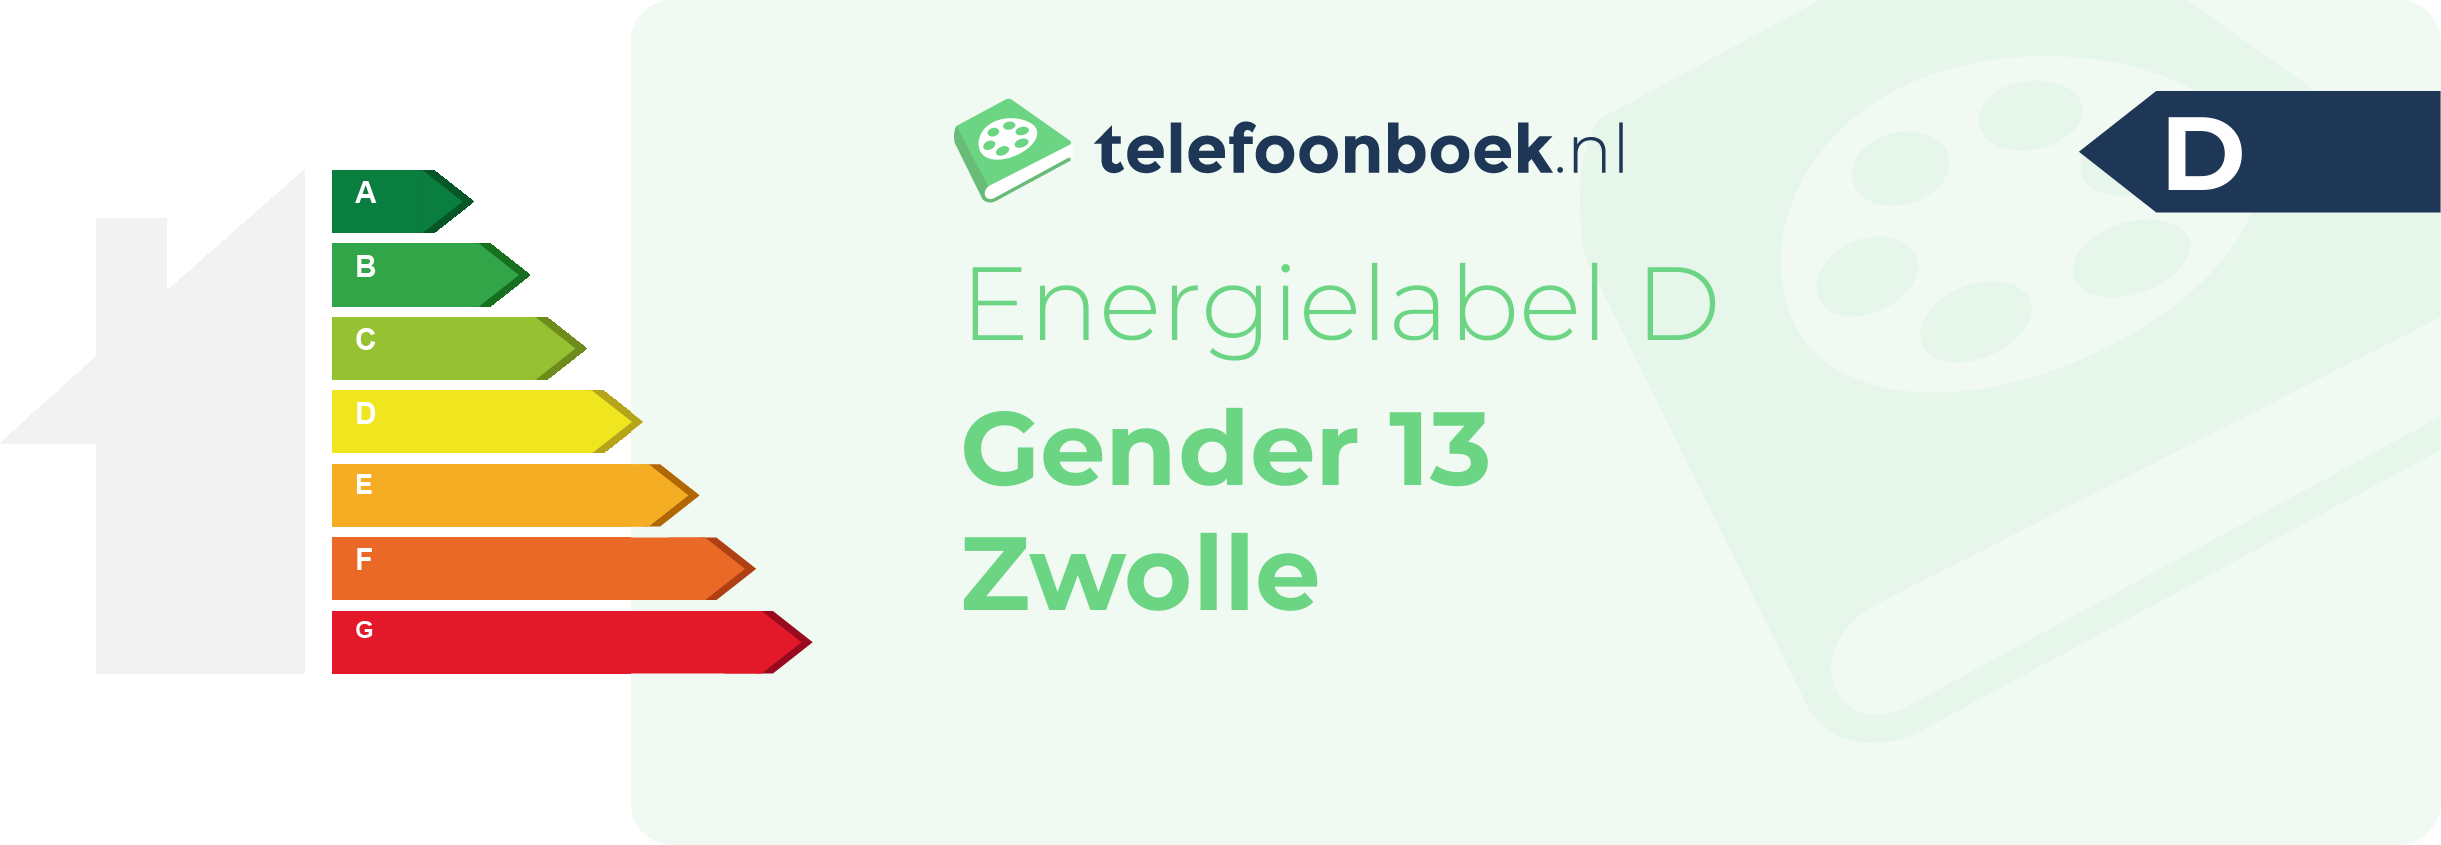 Energielabel Gender 13 Zwolle